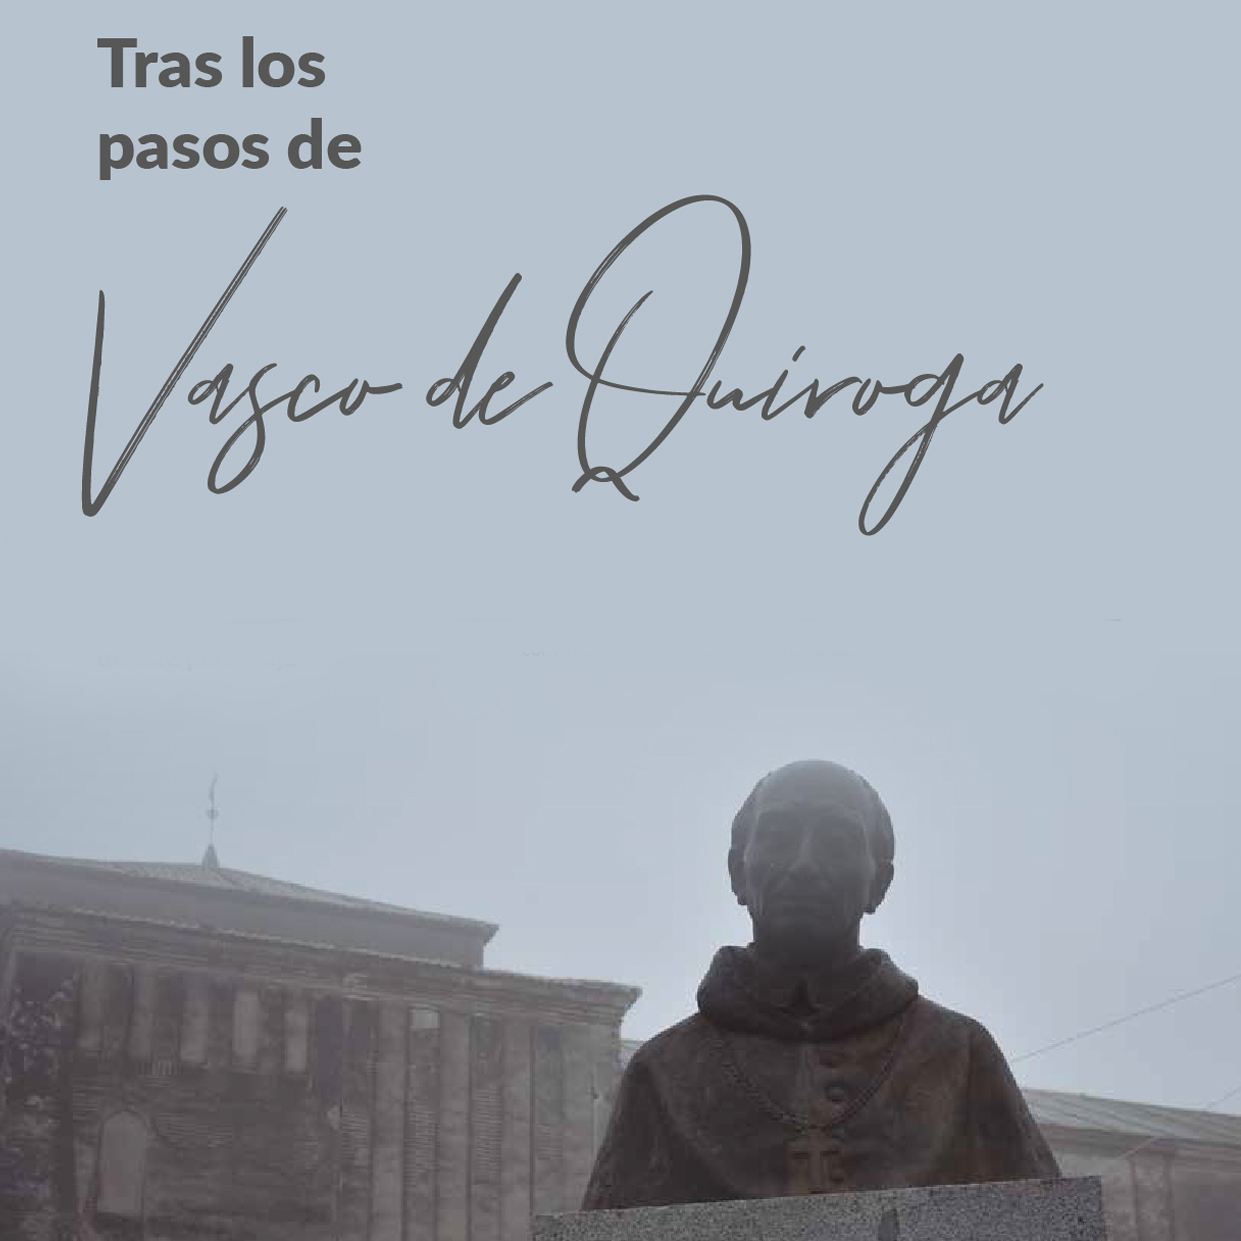 Tras los pasos de Vasco de Quiroga